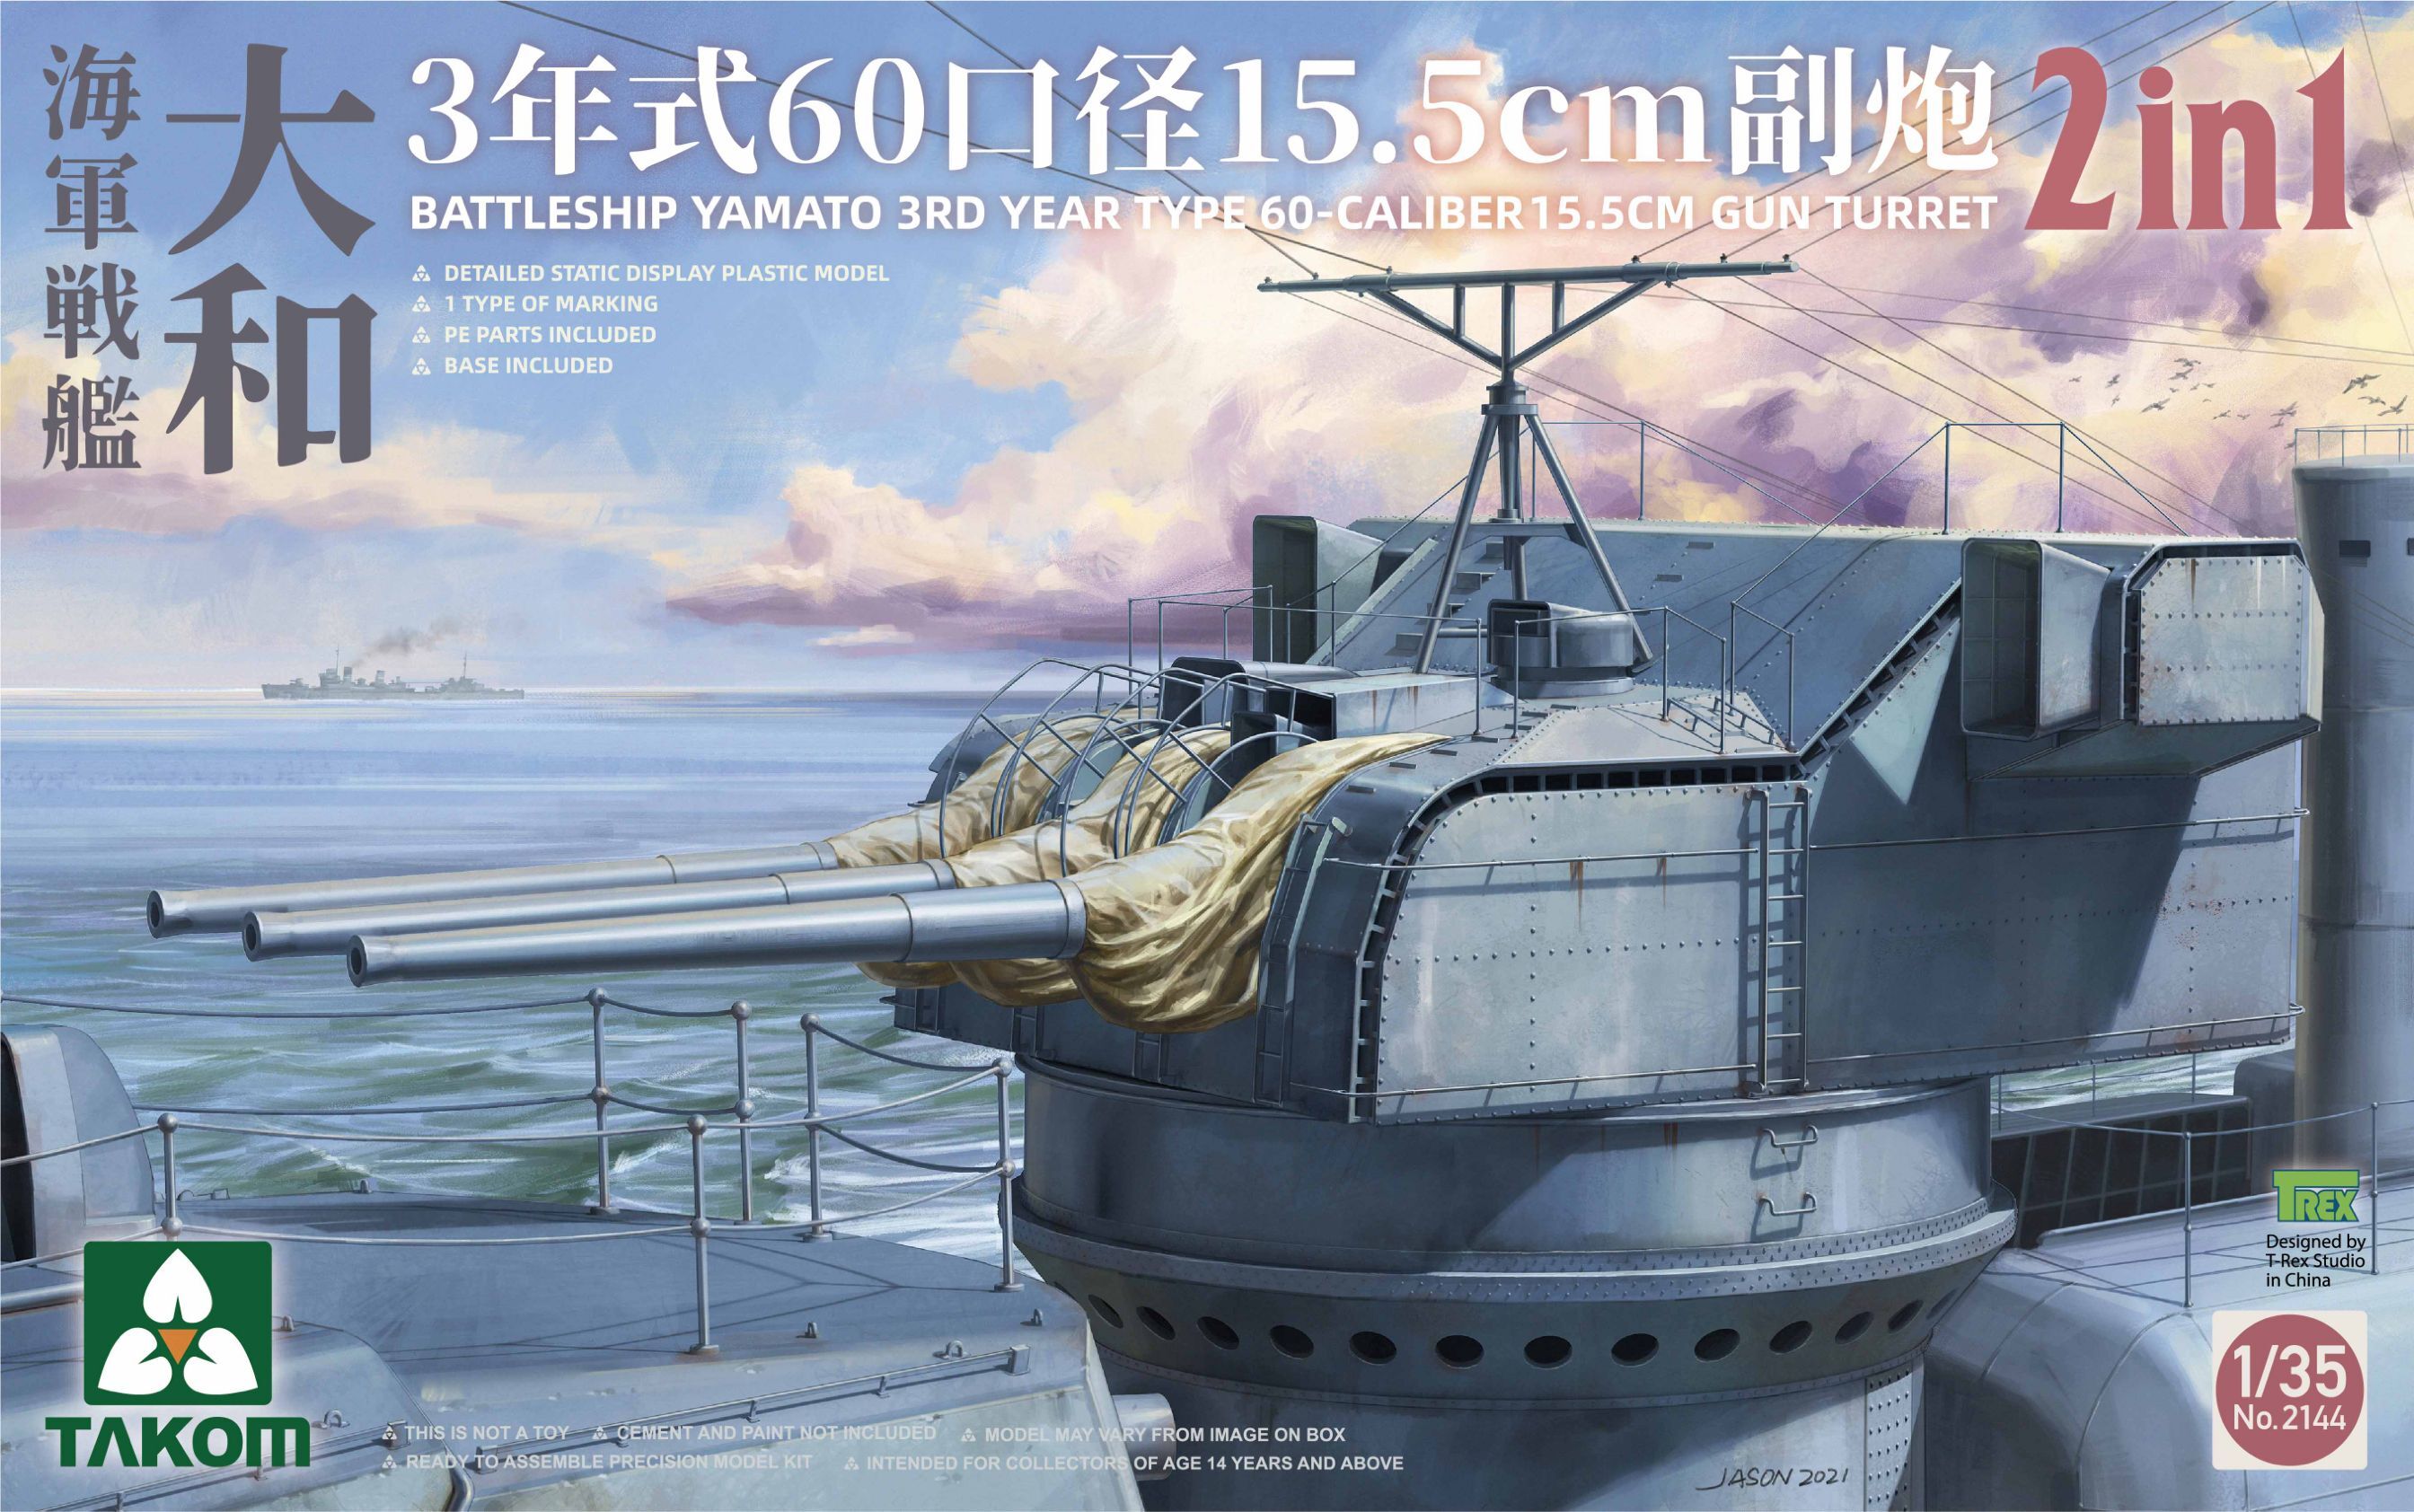 2144  техника и вооружение  Battleship Yamato 15.5 cm/60 3rd Year Type Gun Turret  (1:35)